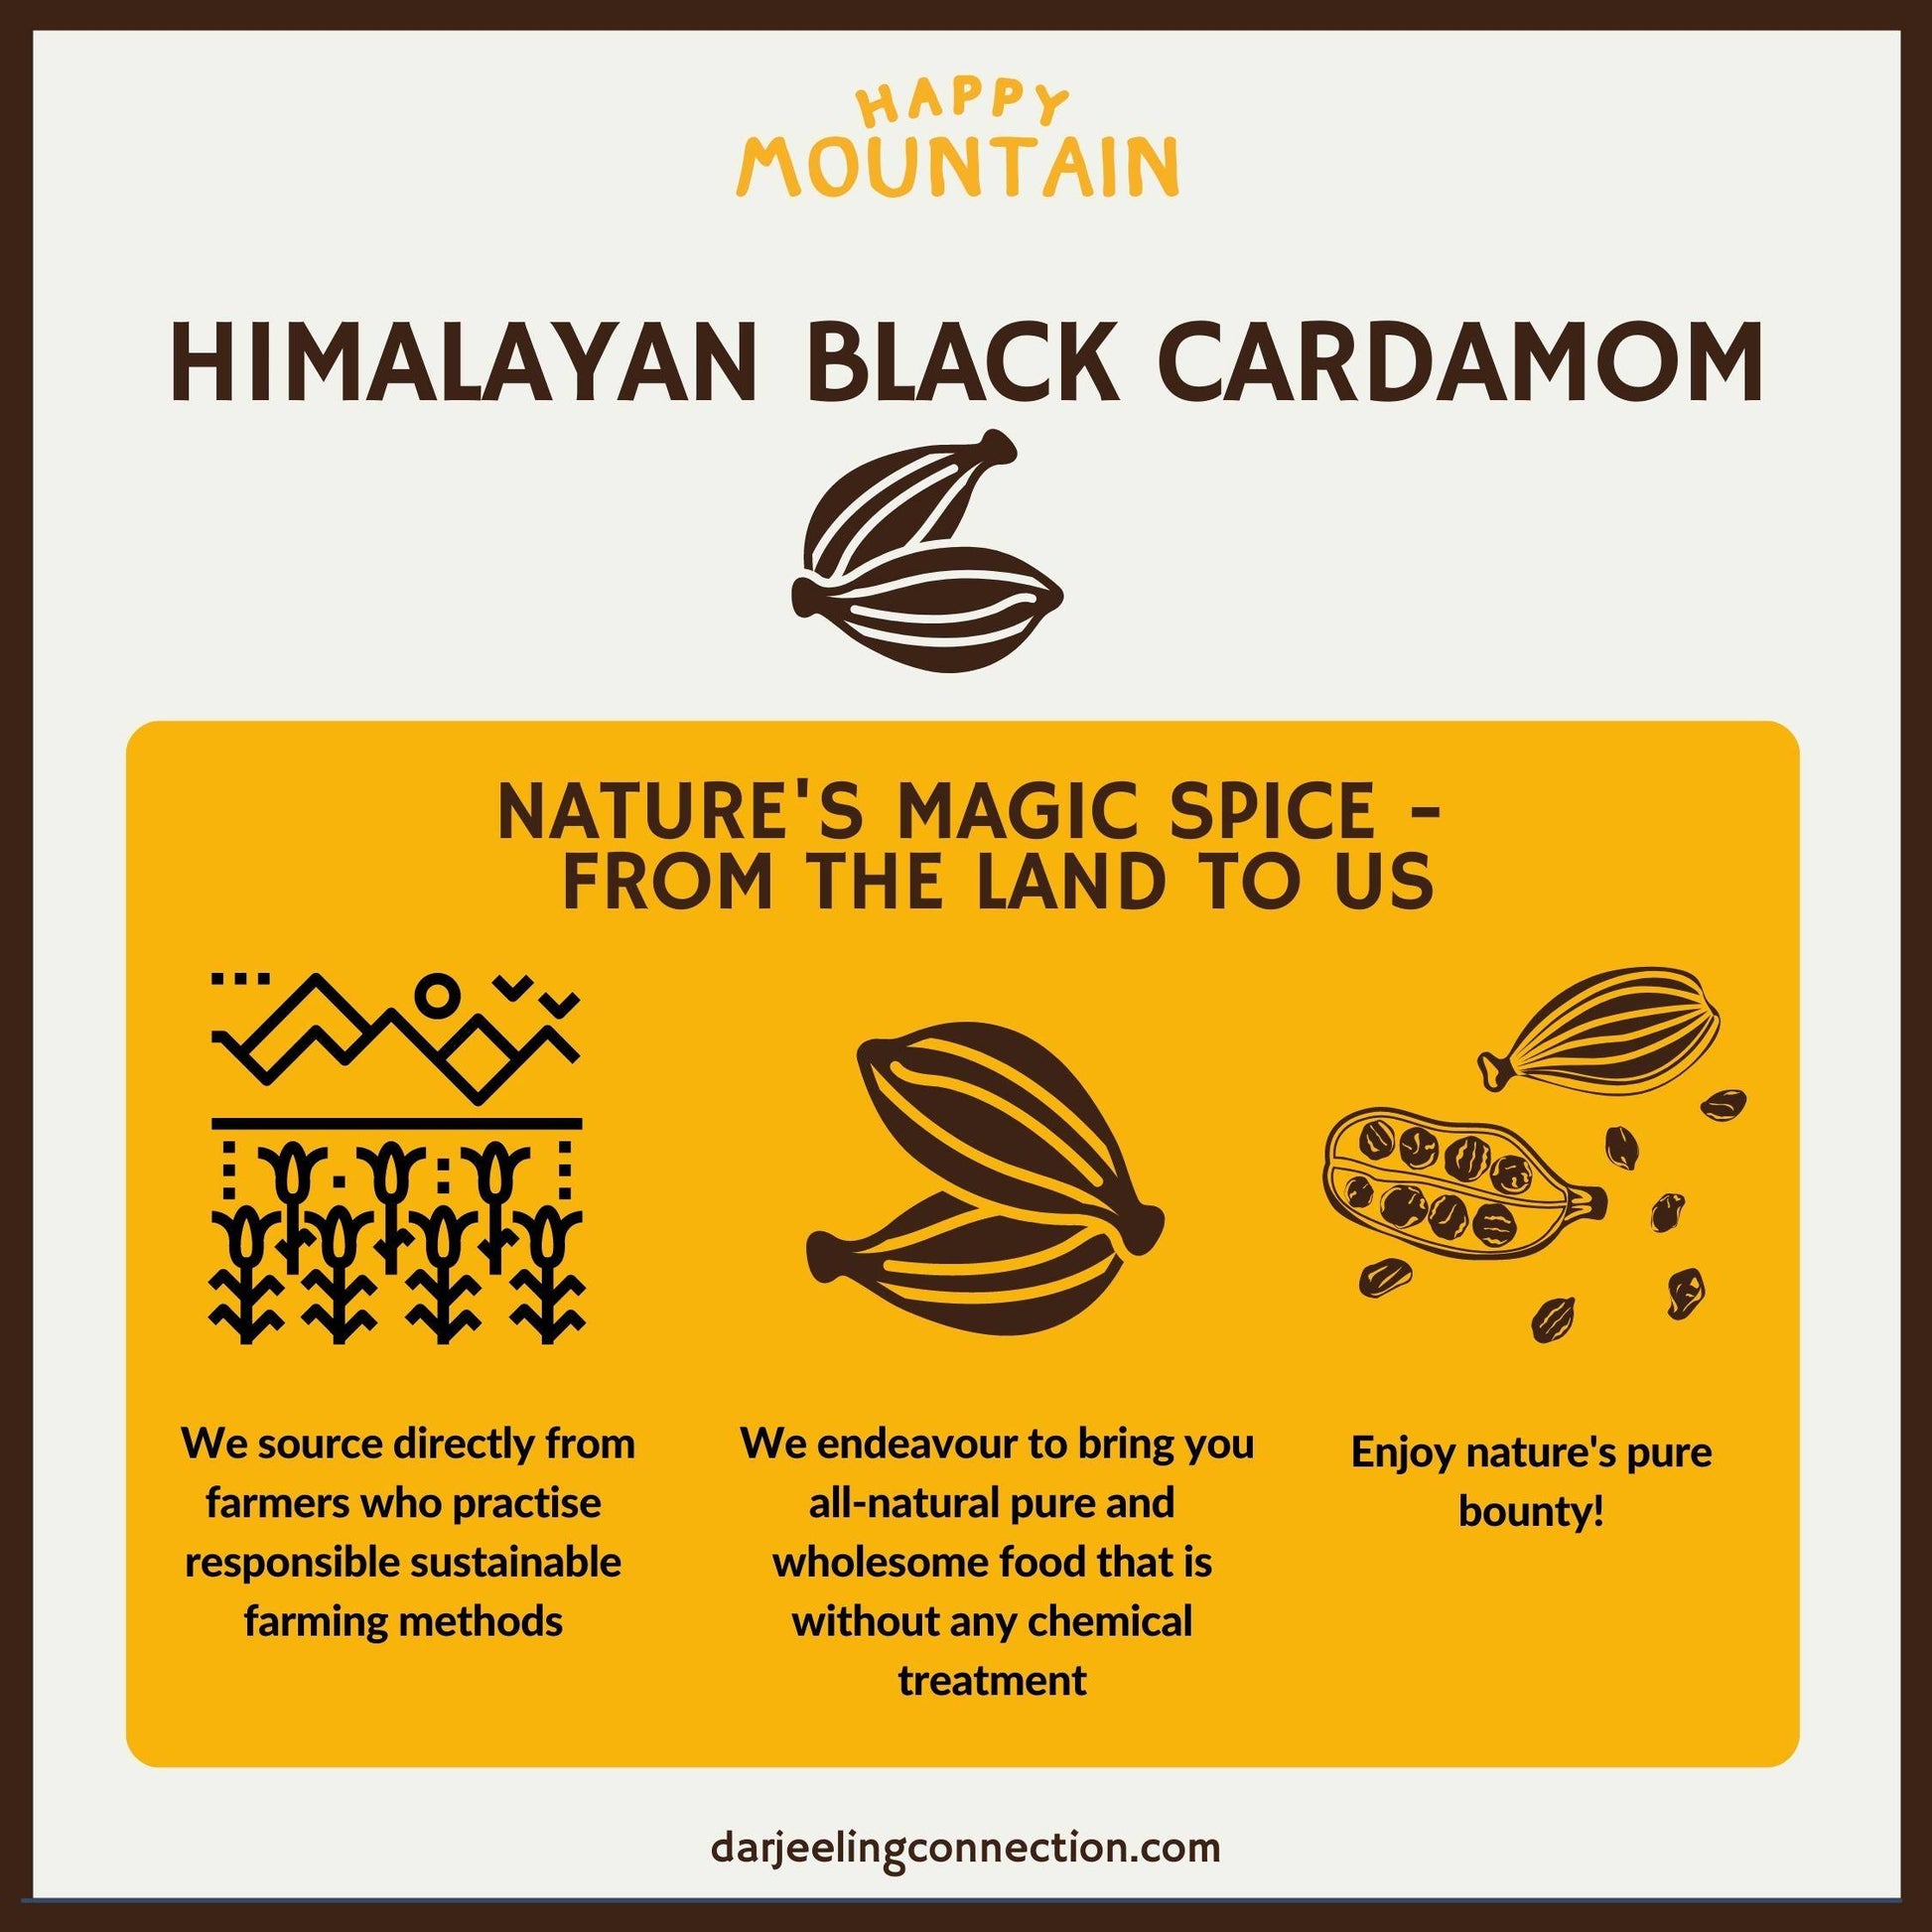 Himalayan Black Cardamom - Happy Mountain